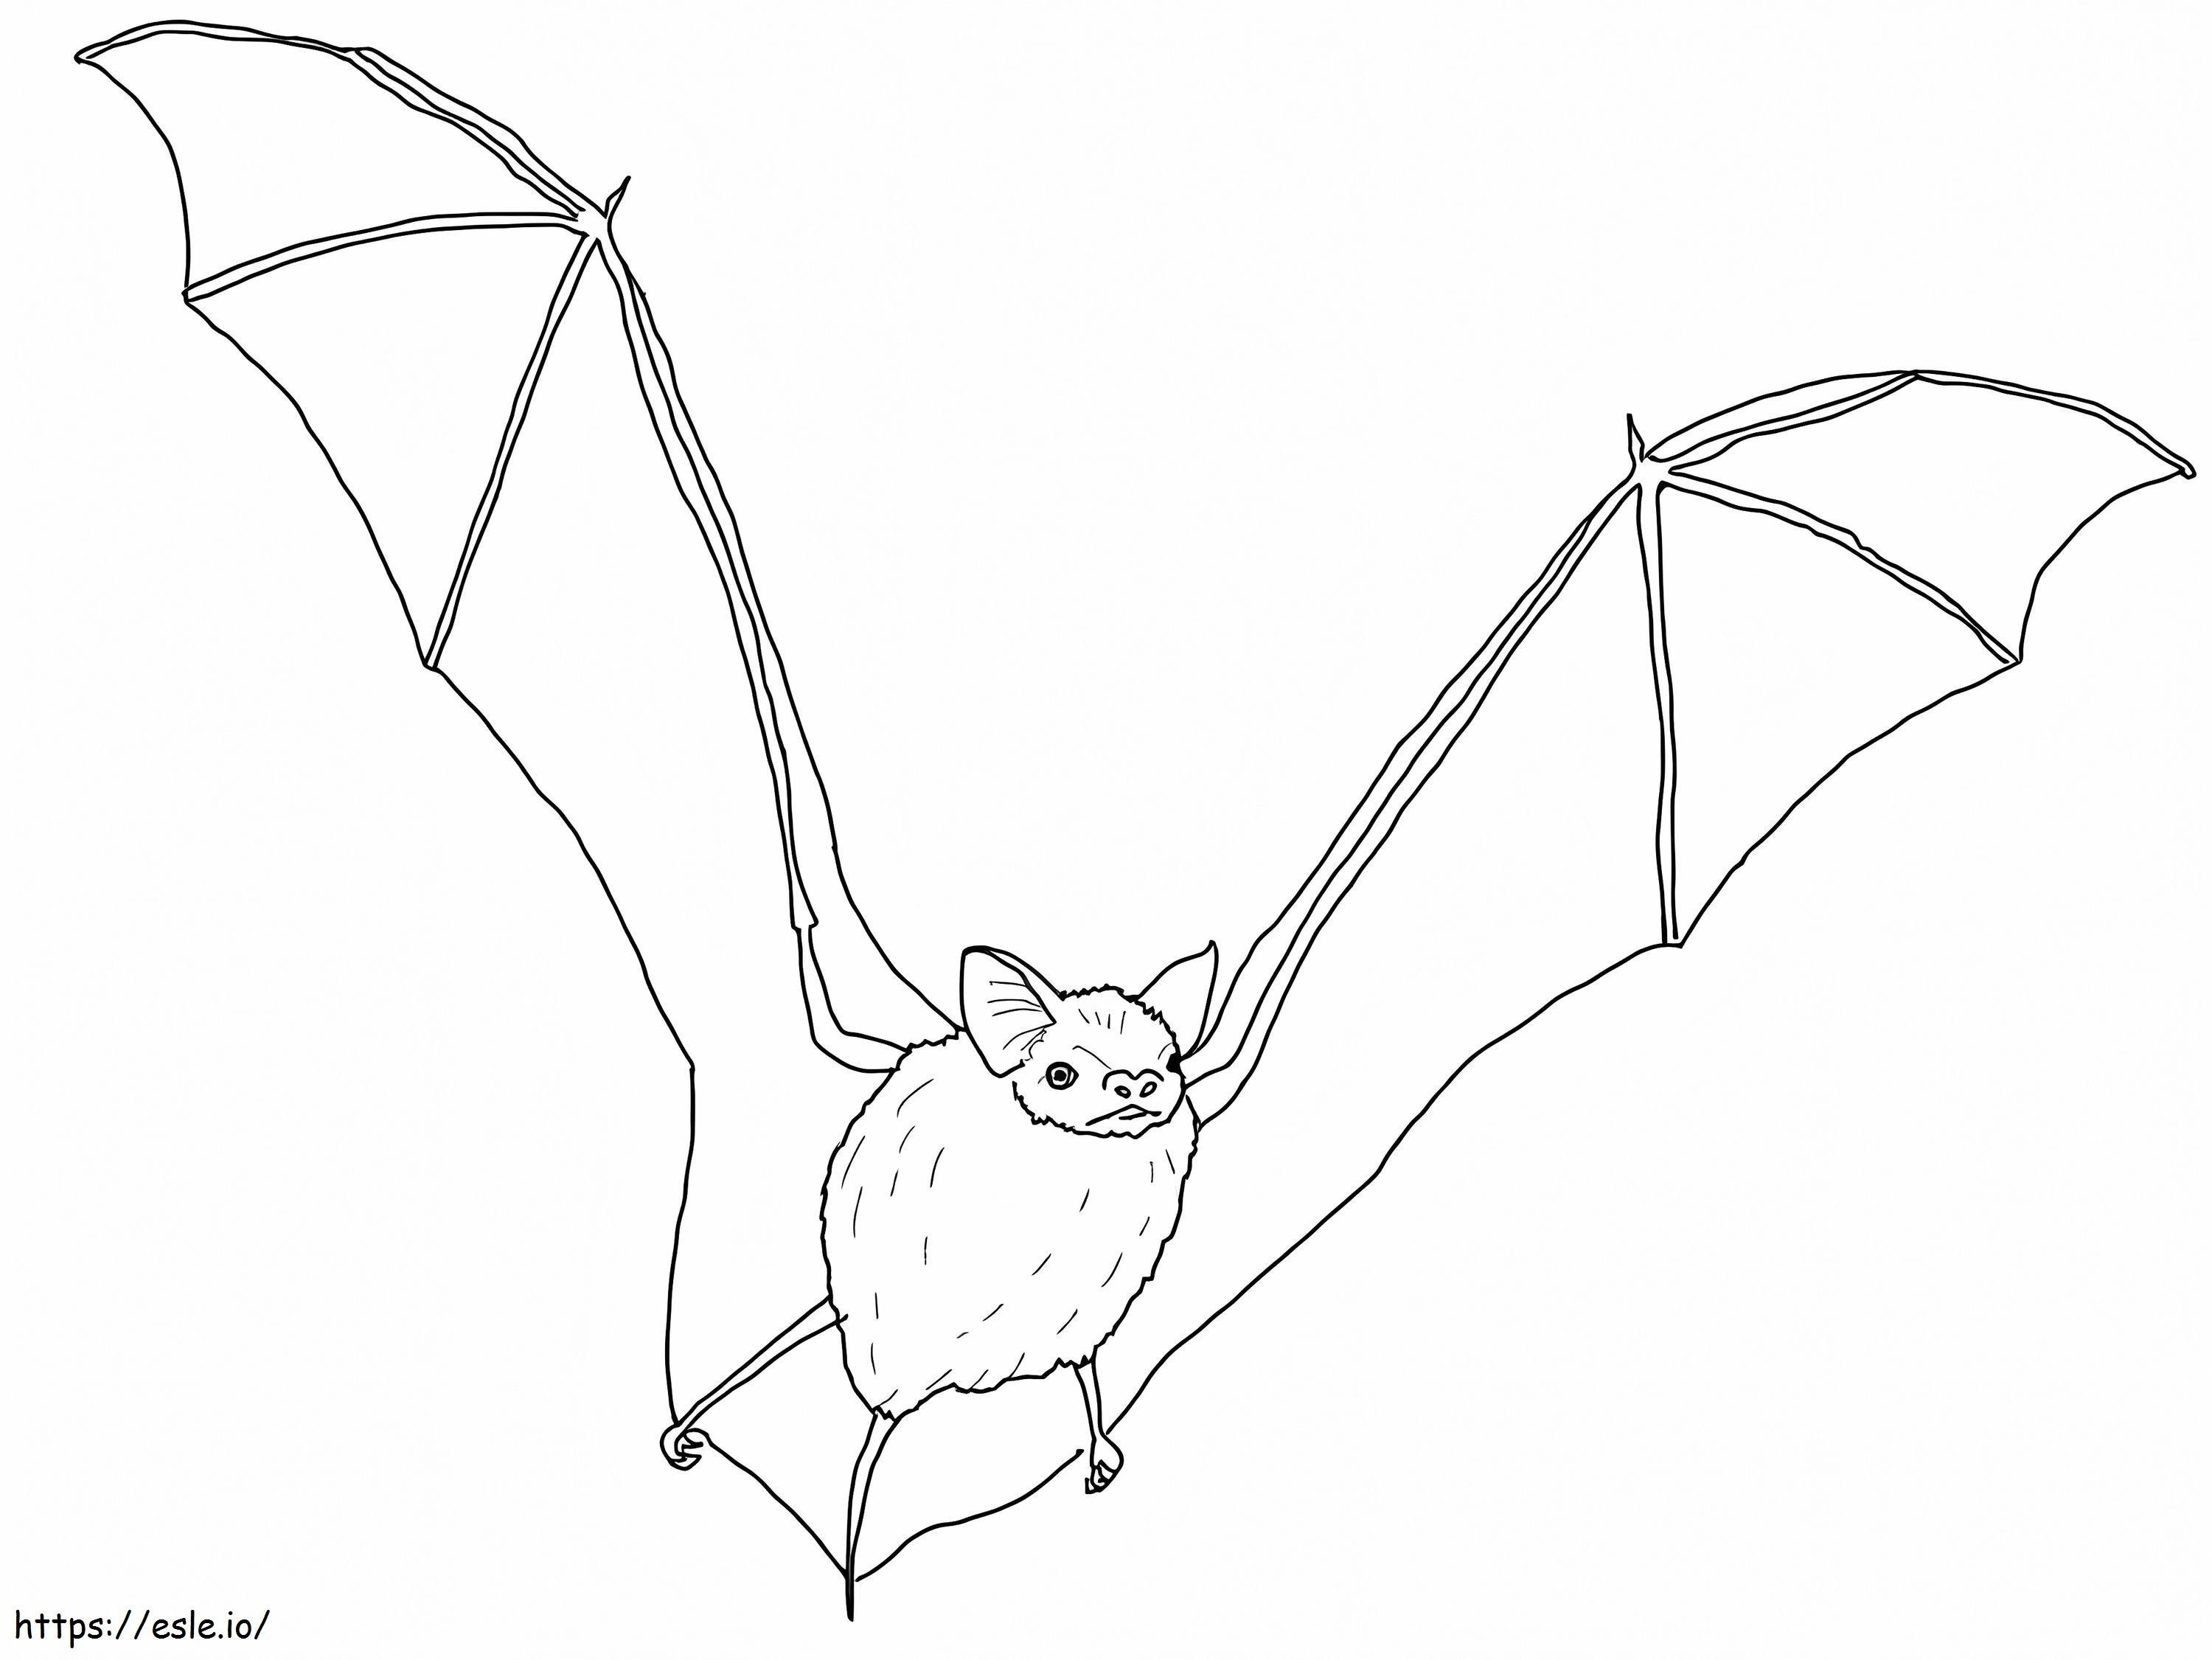 Big Brown Bat coloring page